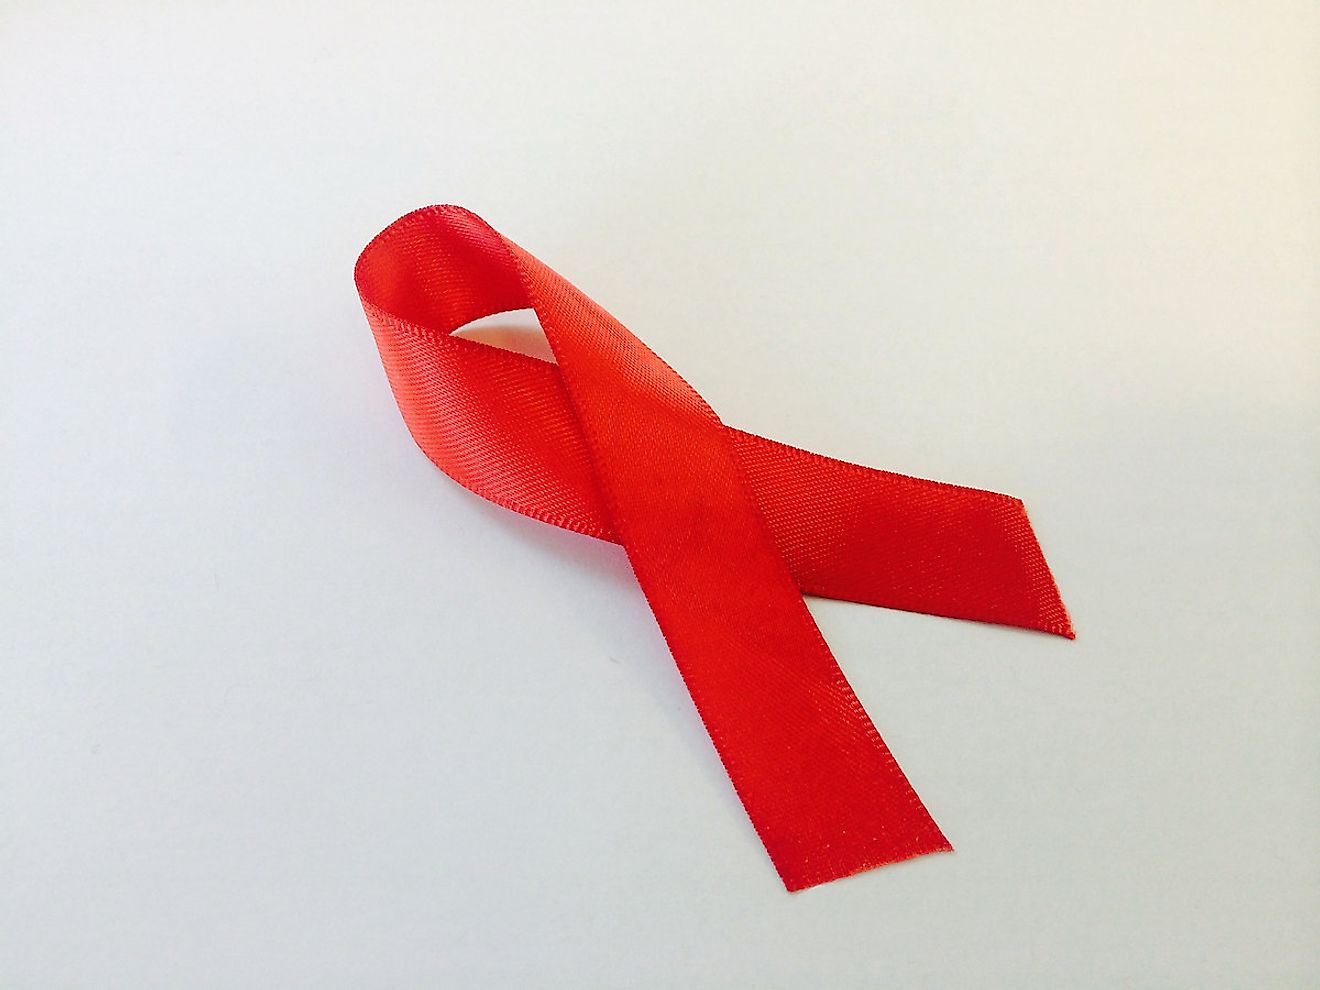 AIDS Awareness symbol. Image credit: NIAID/Flickr.com